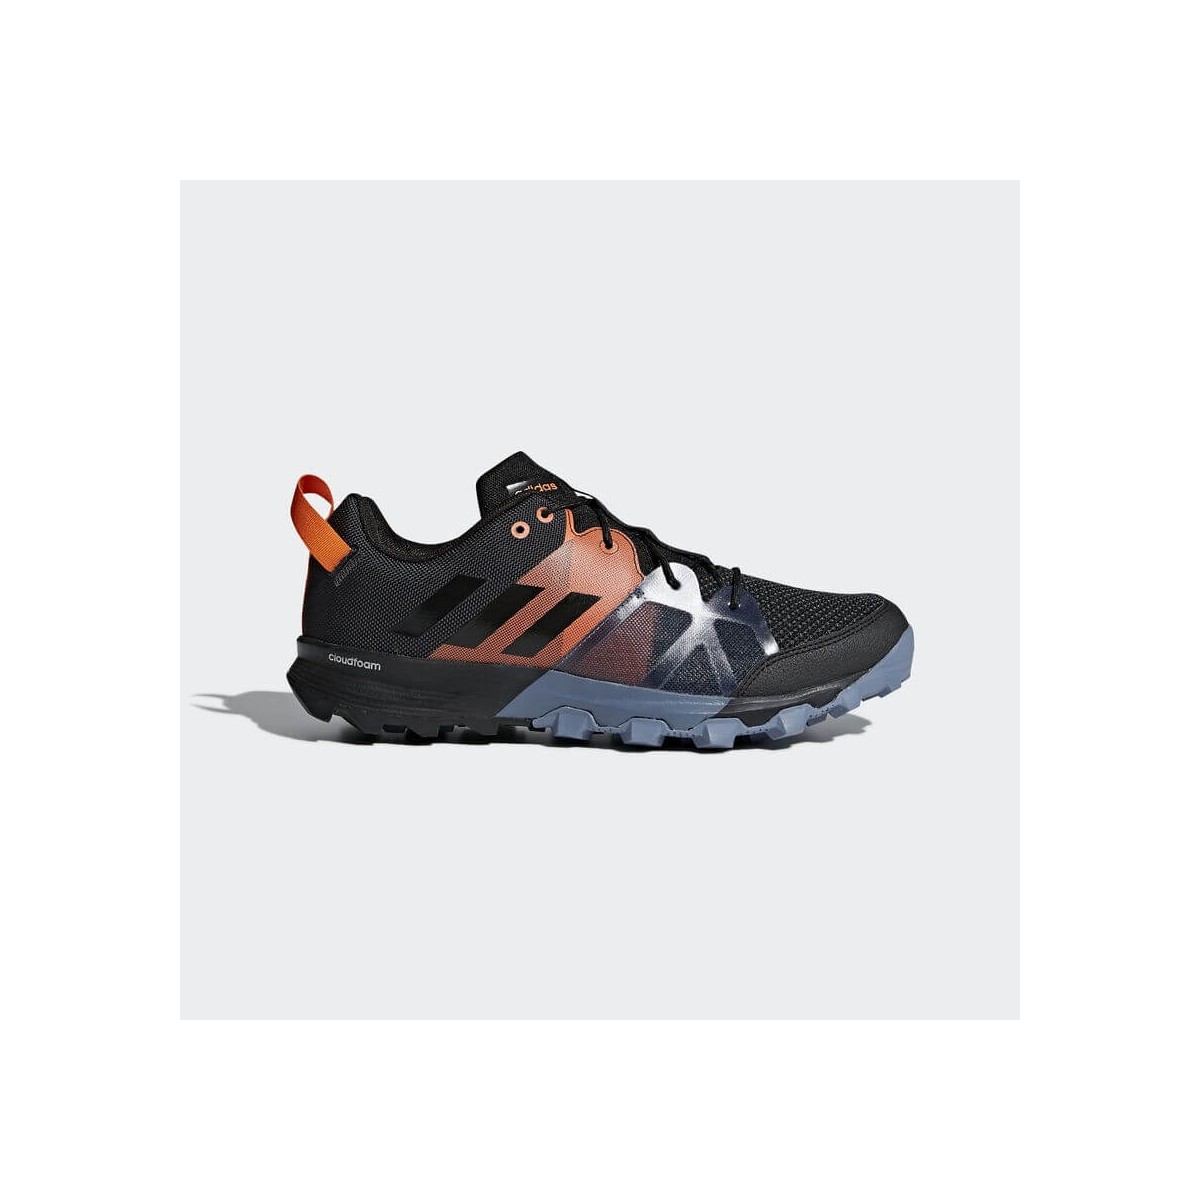 Kanadia 8.1 TR Men's Shoes SS18 Black / Orange - 365Rider